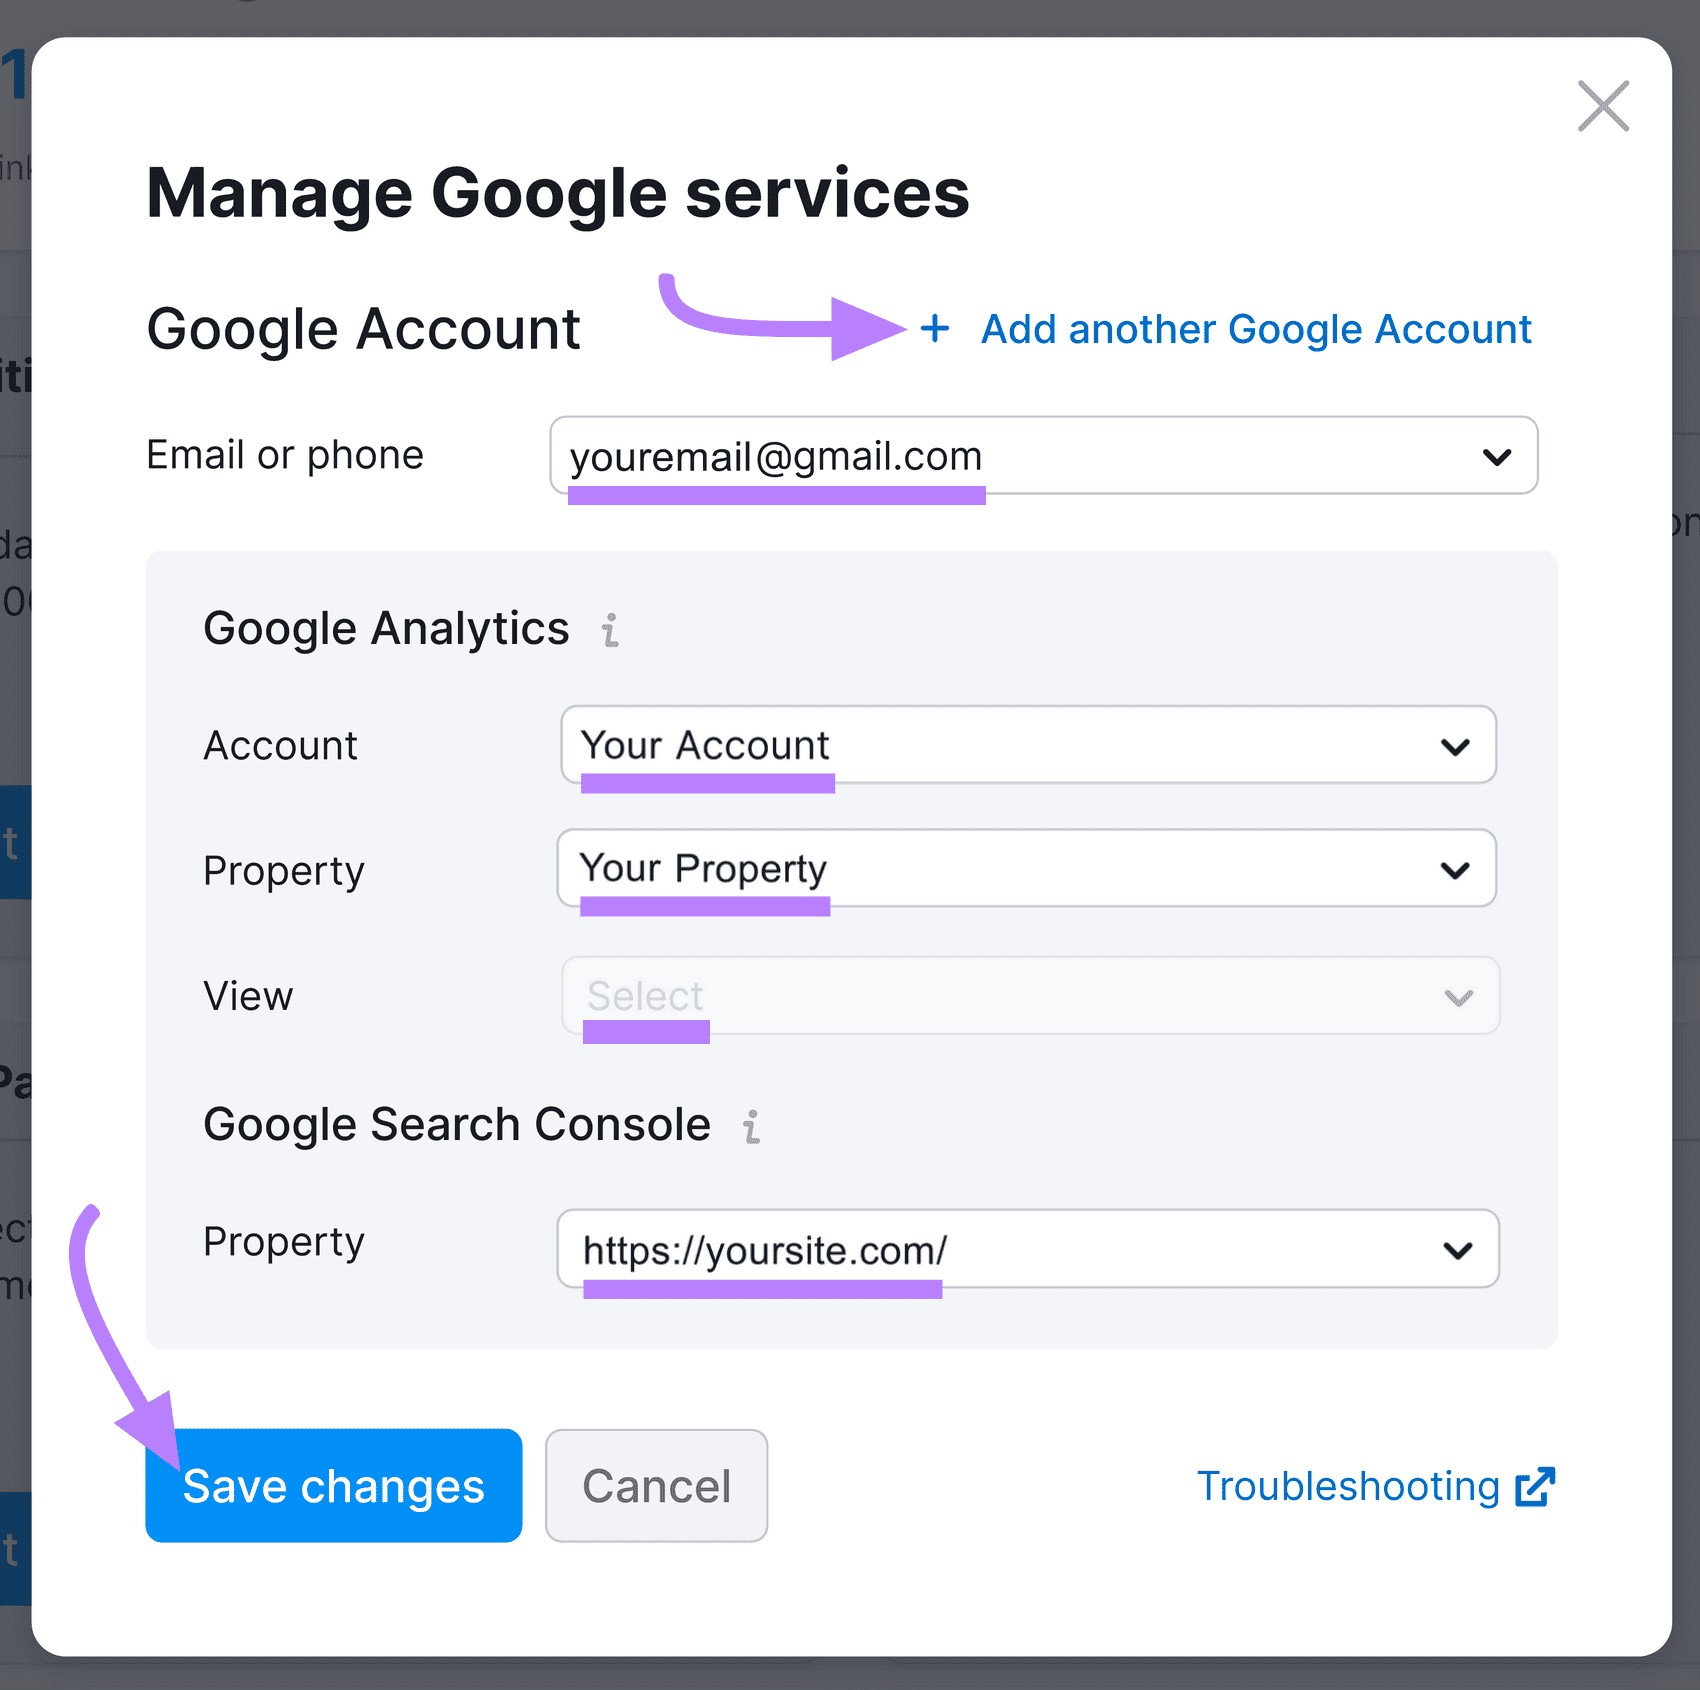 “Manage Google services” dialogue box